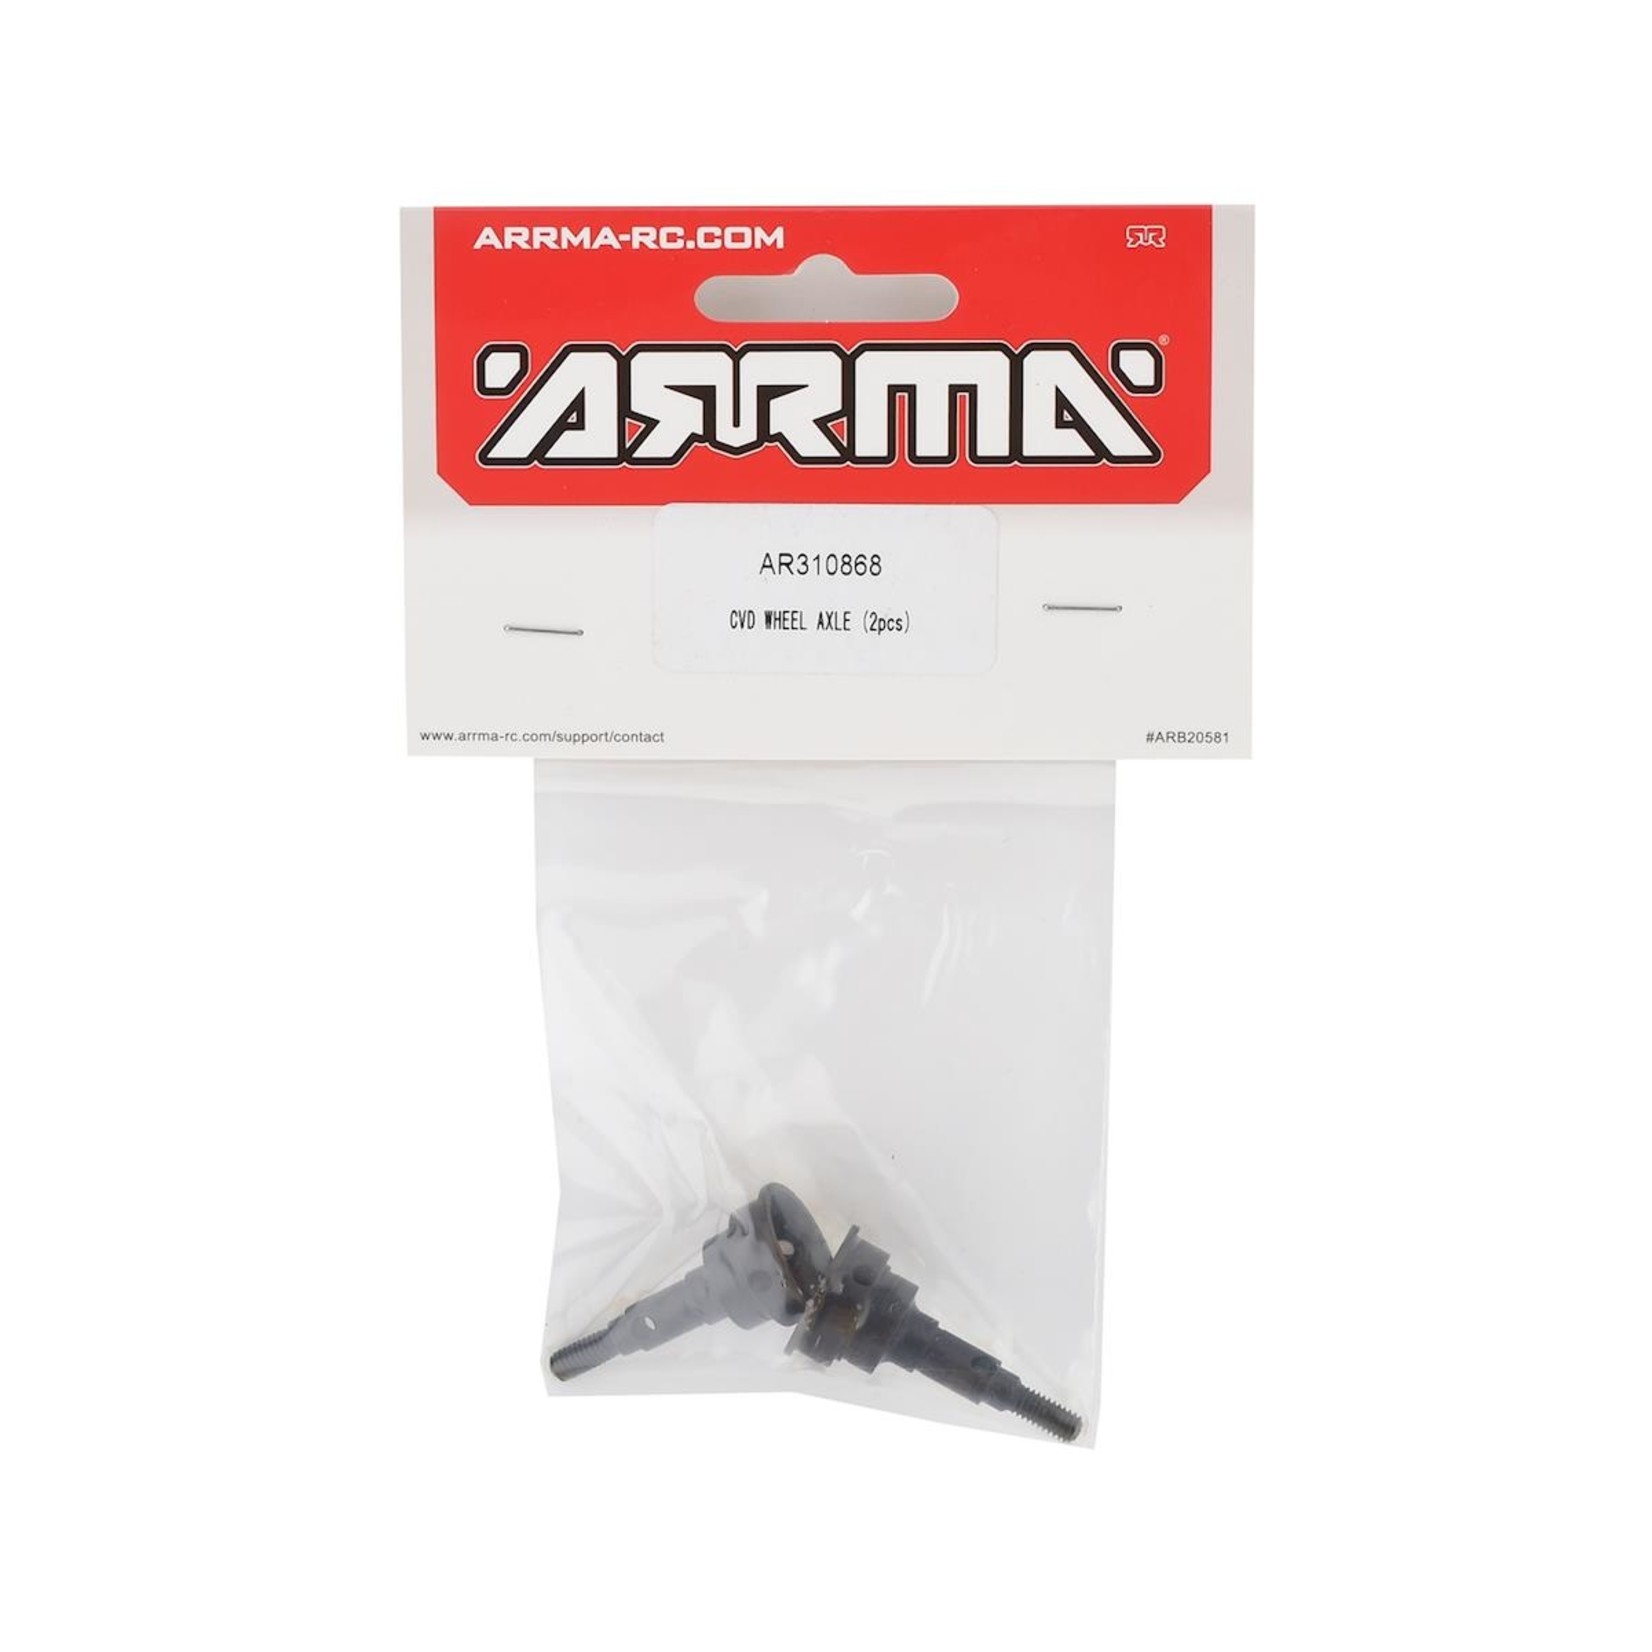 ARRMA Arrma 4X4 Mega CVD Wheel Axle (2) #AR310868